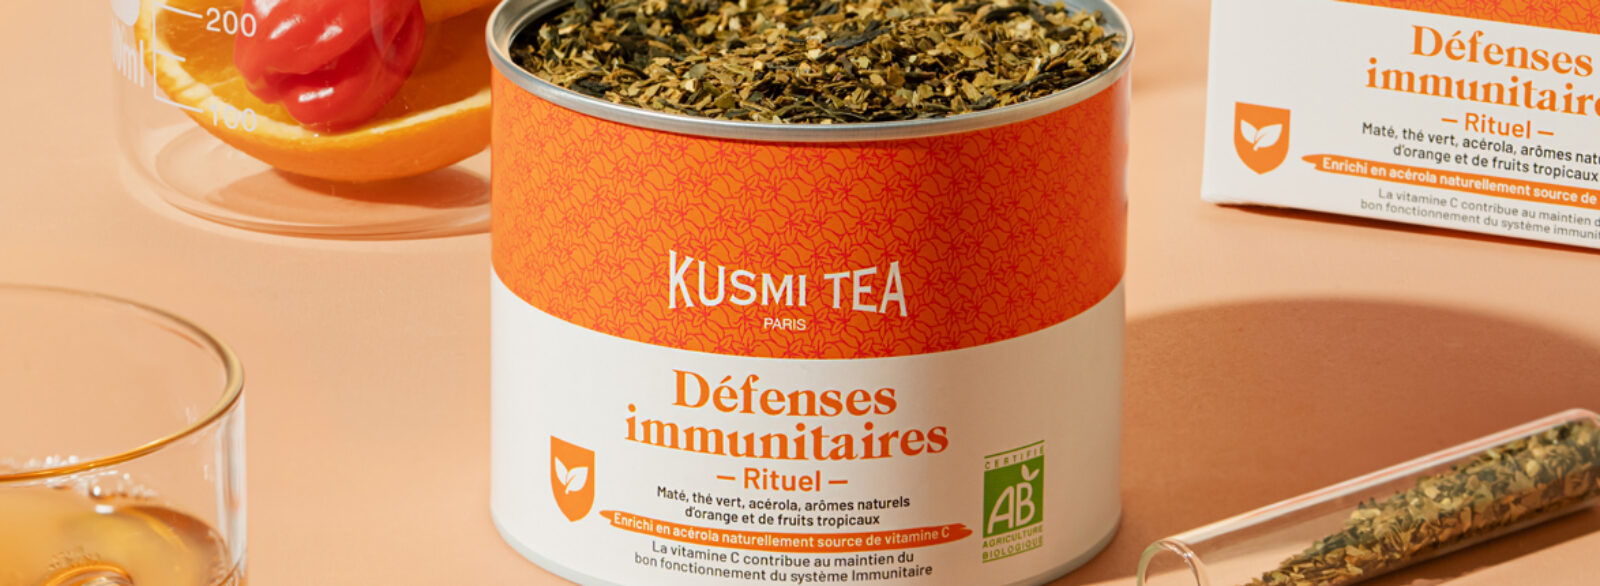 Kusmi Tea One Nation Paris Outlet